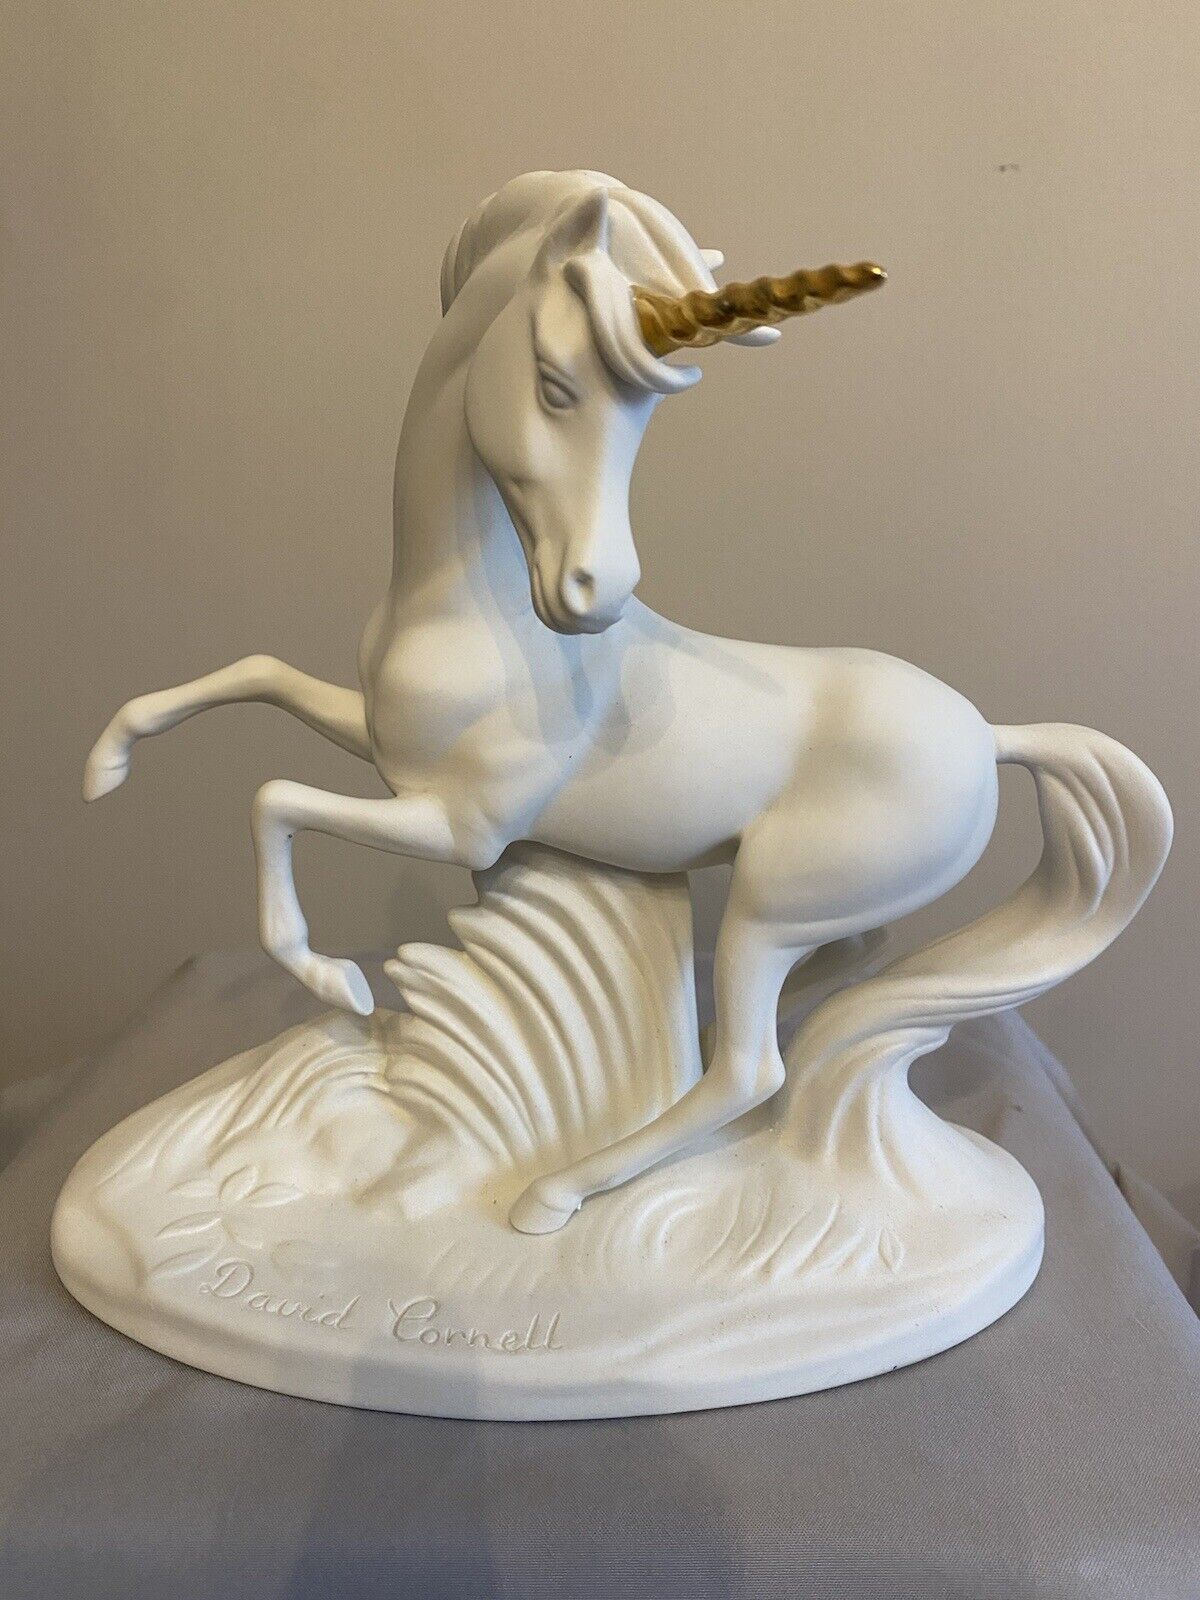 1986 Franklin Mint “The Spirit Of Romance” Porcelain Unicorn